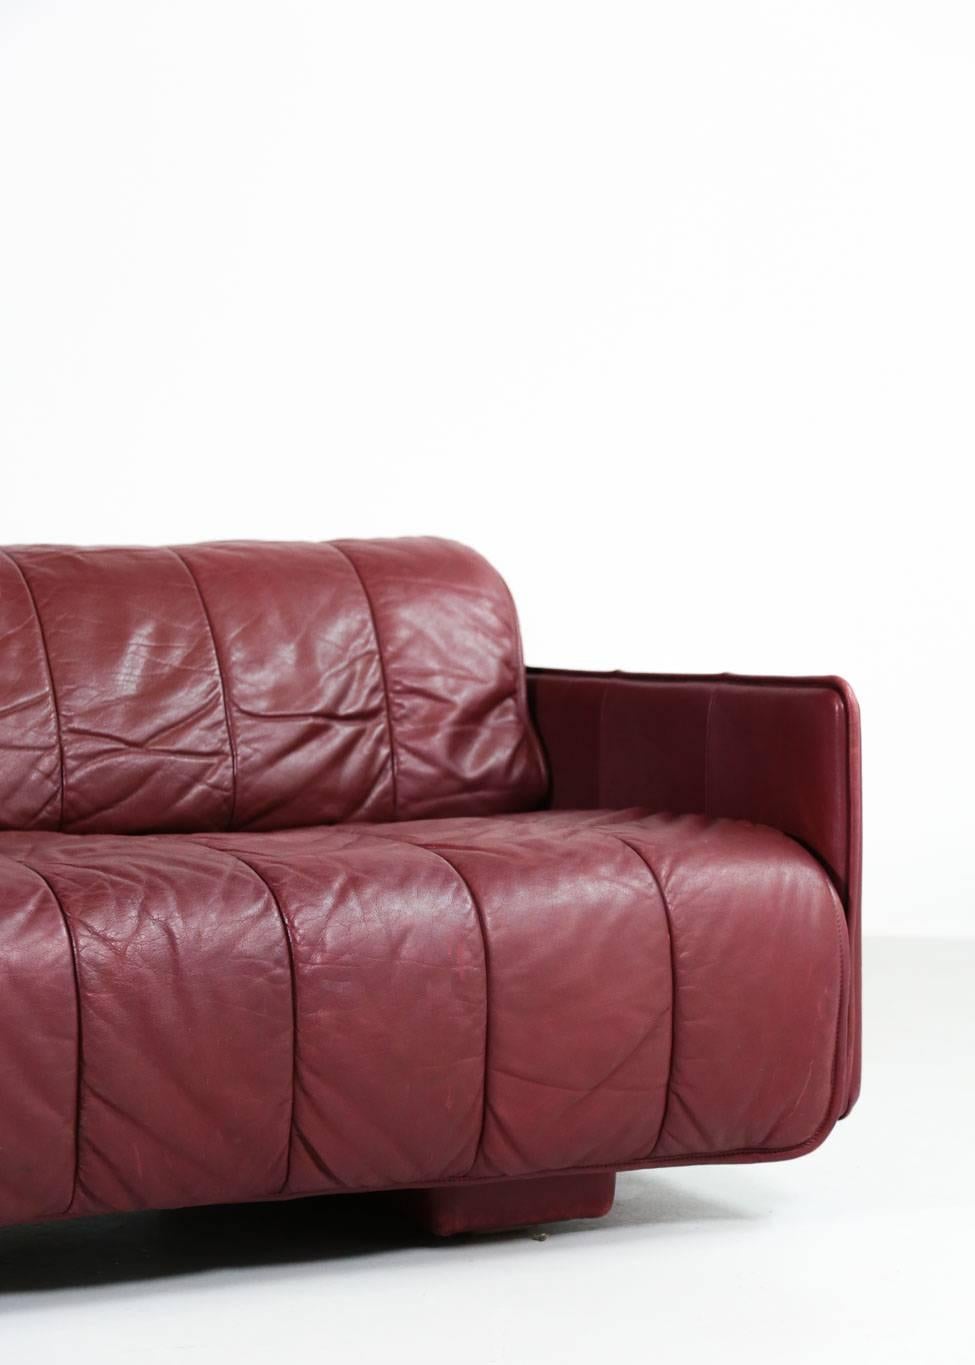 Mid-Century Modern De Sede Leather Sofa Bed, 1970s Swiss Design DS85 DS600